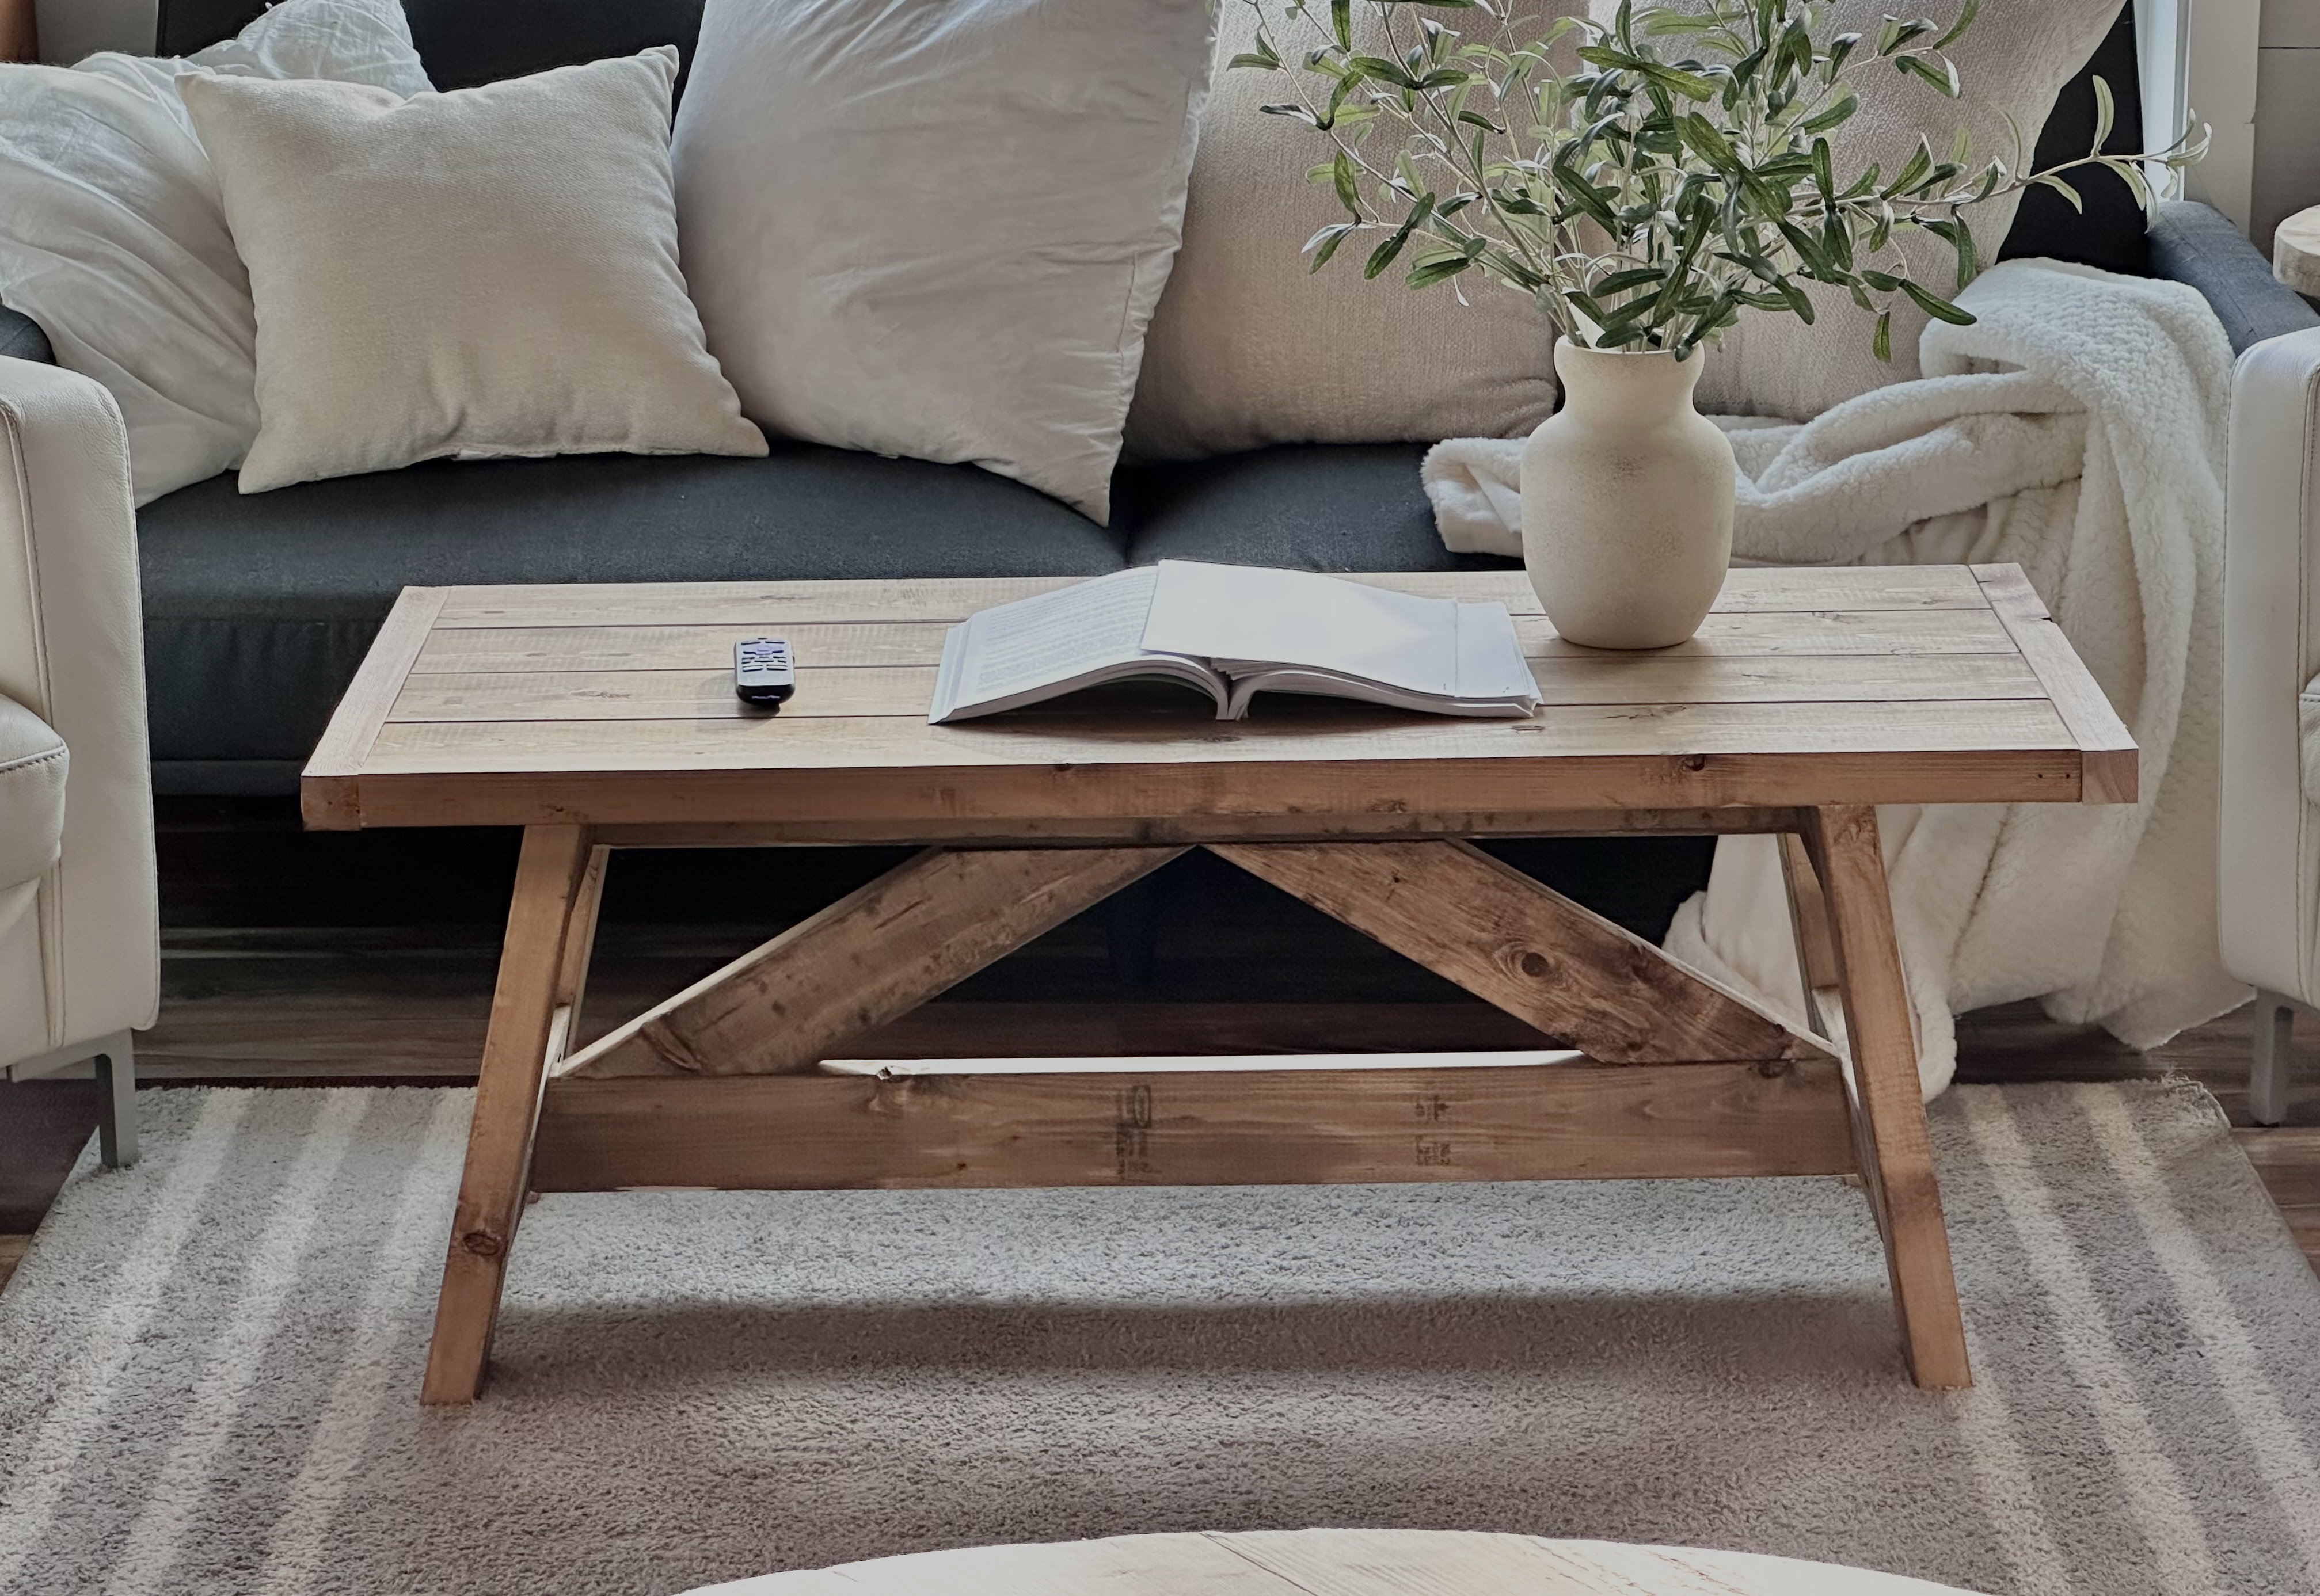 DIY truss coffee table plans